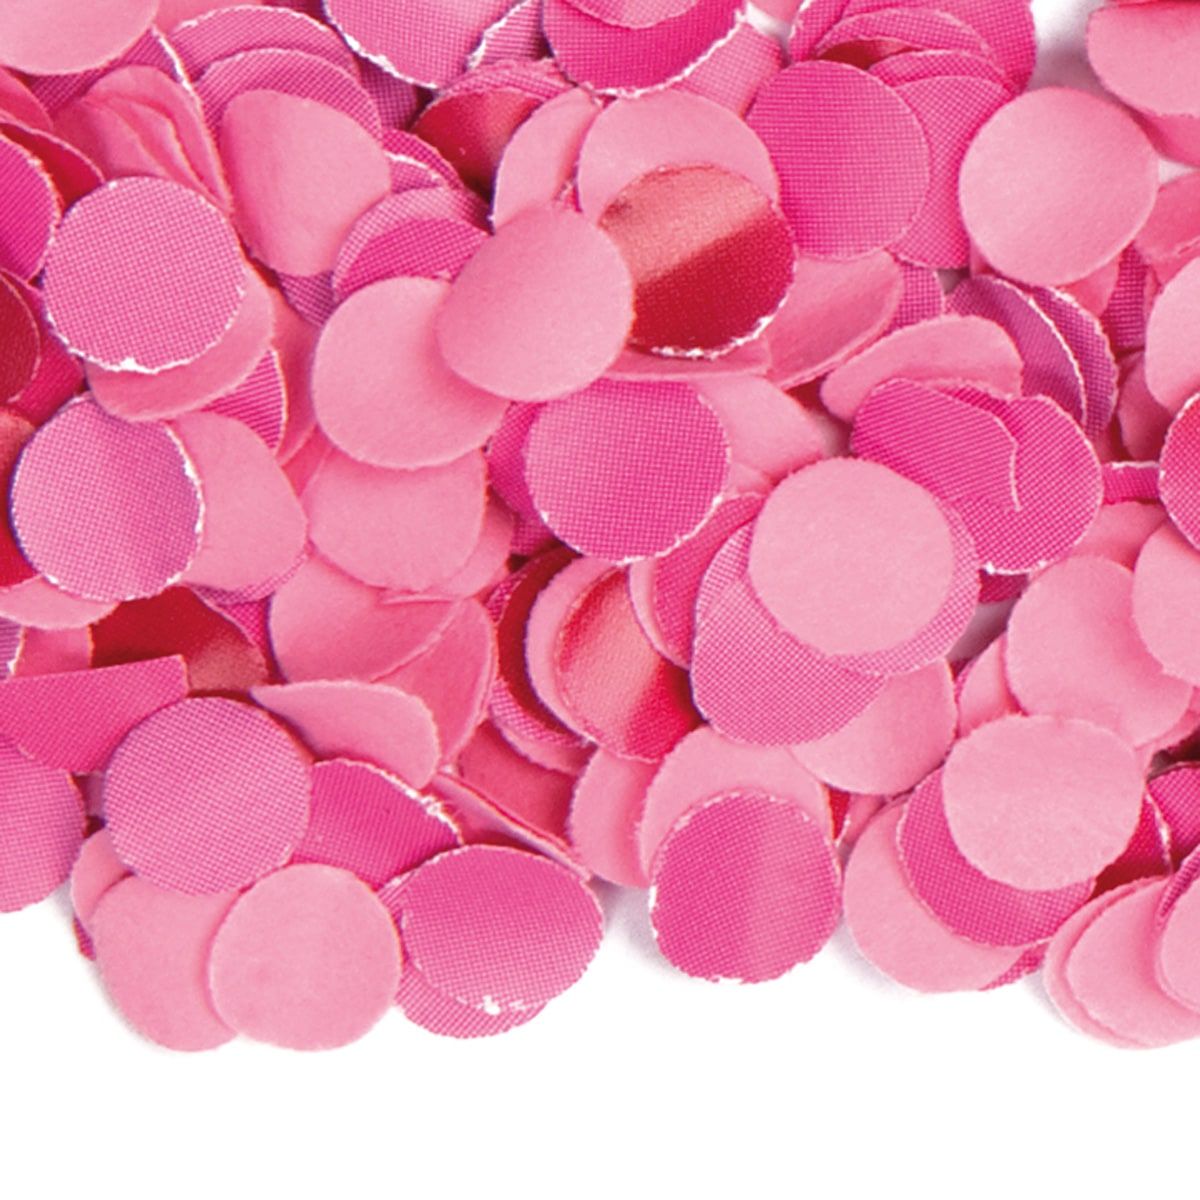 Feest confetti 100 gram roze